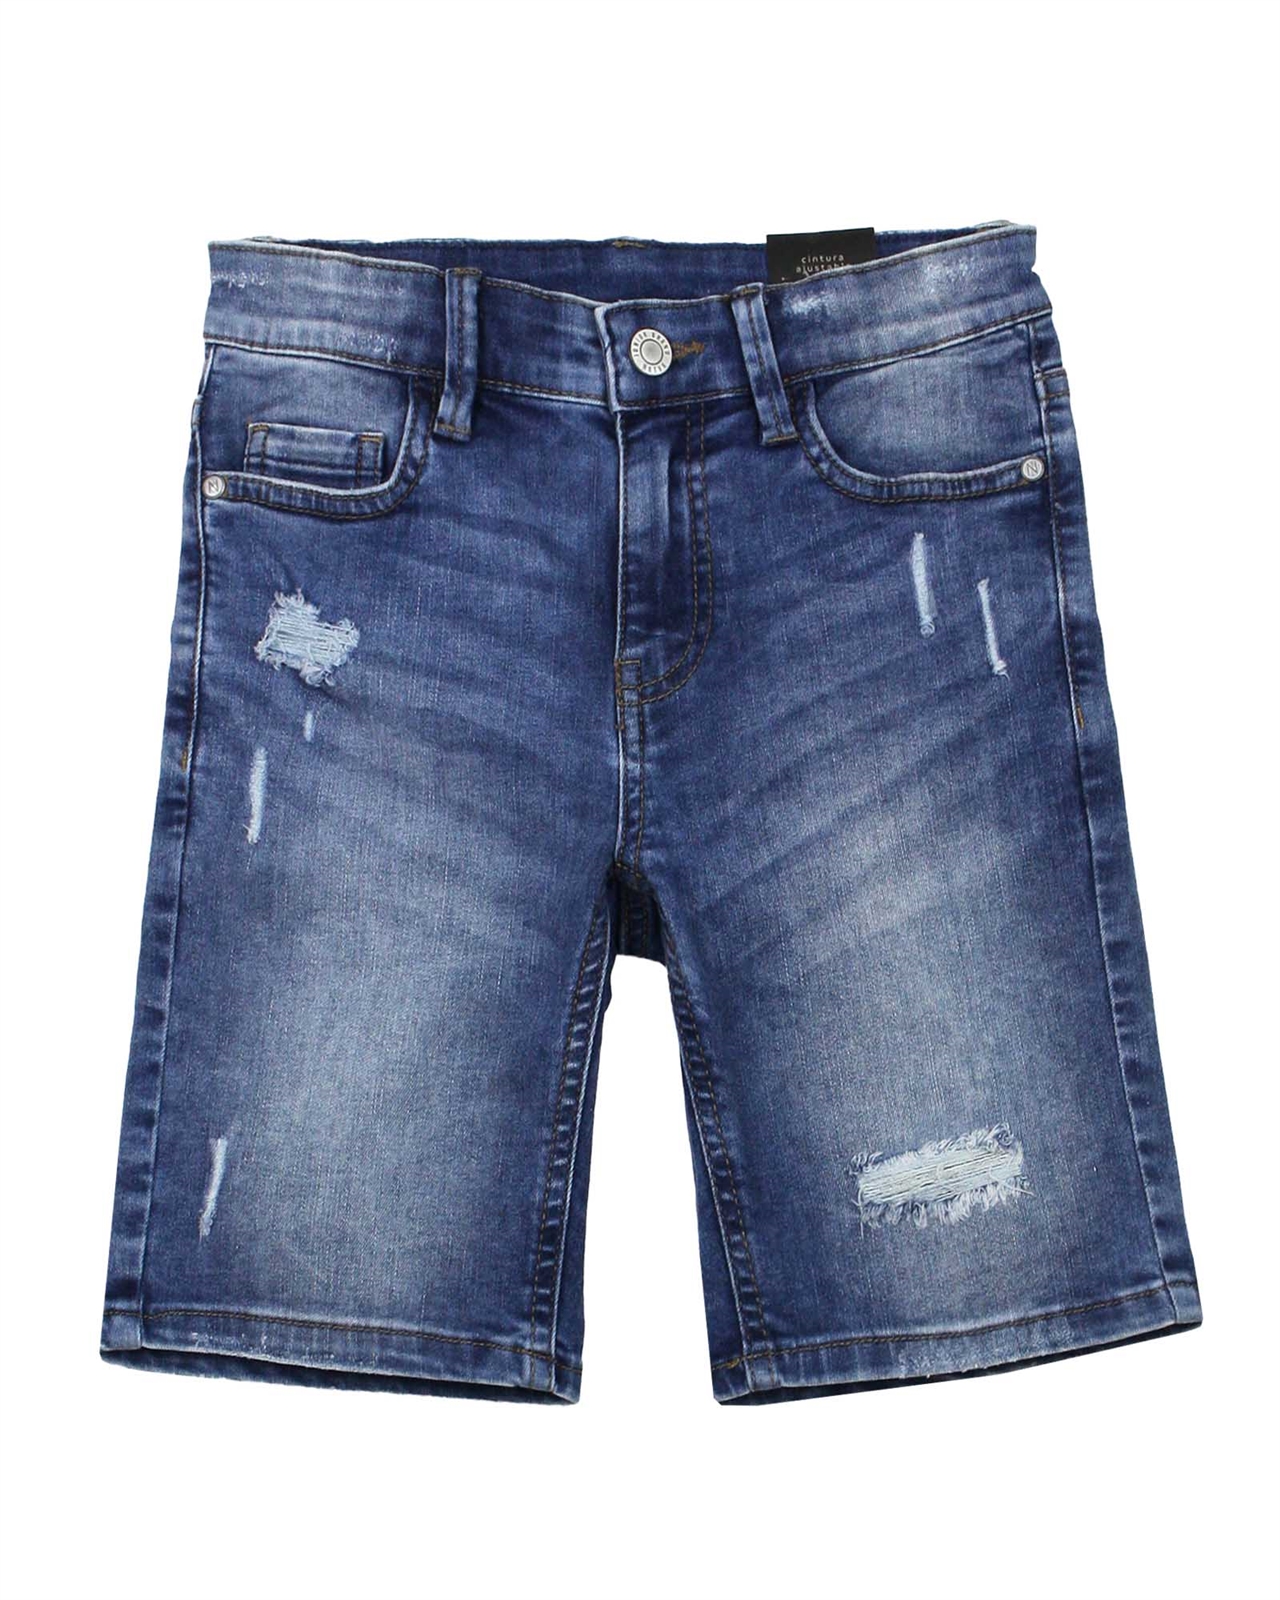 Mayoral Junior Boys' Denim Shorts in Distressed Look - Mayoral ...